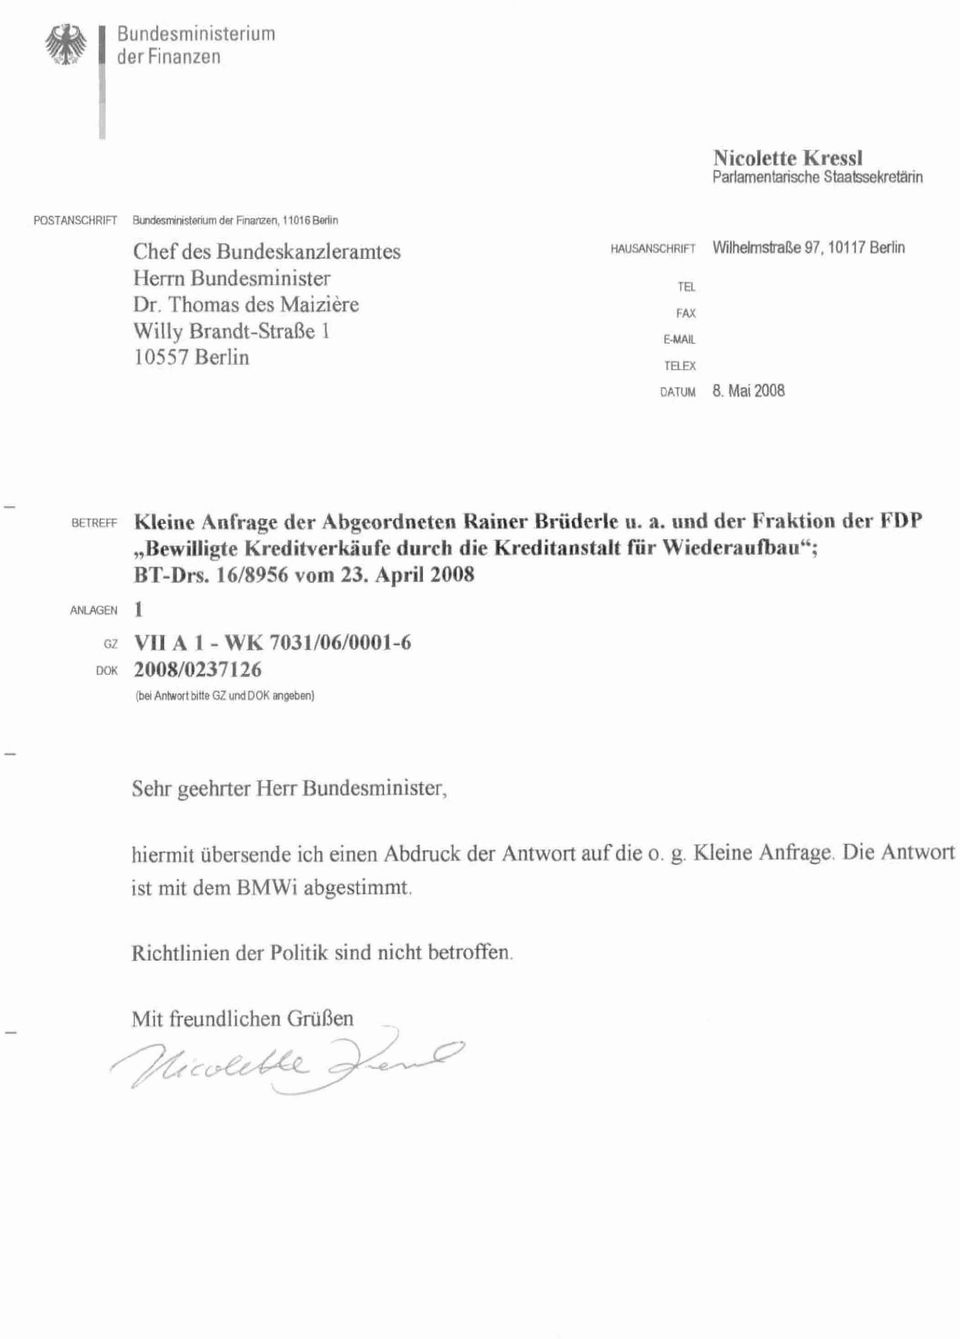 irmd der Fraktion der FDP,Rewiiligte Kredilverkäiifedirrch die KPieditsnstalt fir Wiederiinfaaii": BT-Drs. E 6JS956vom 23.